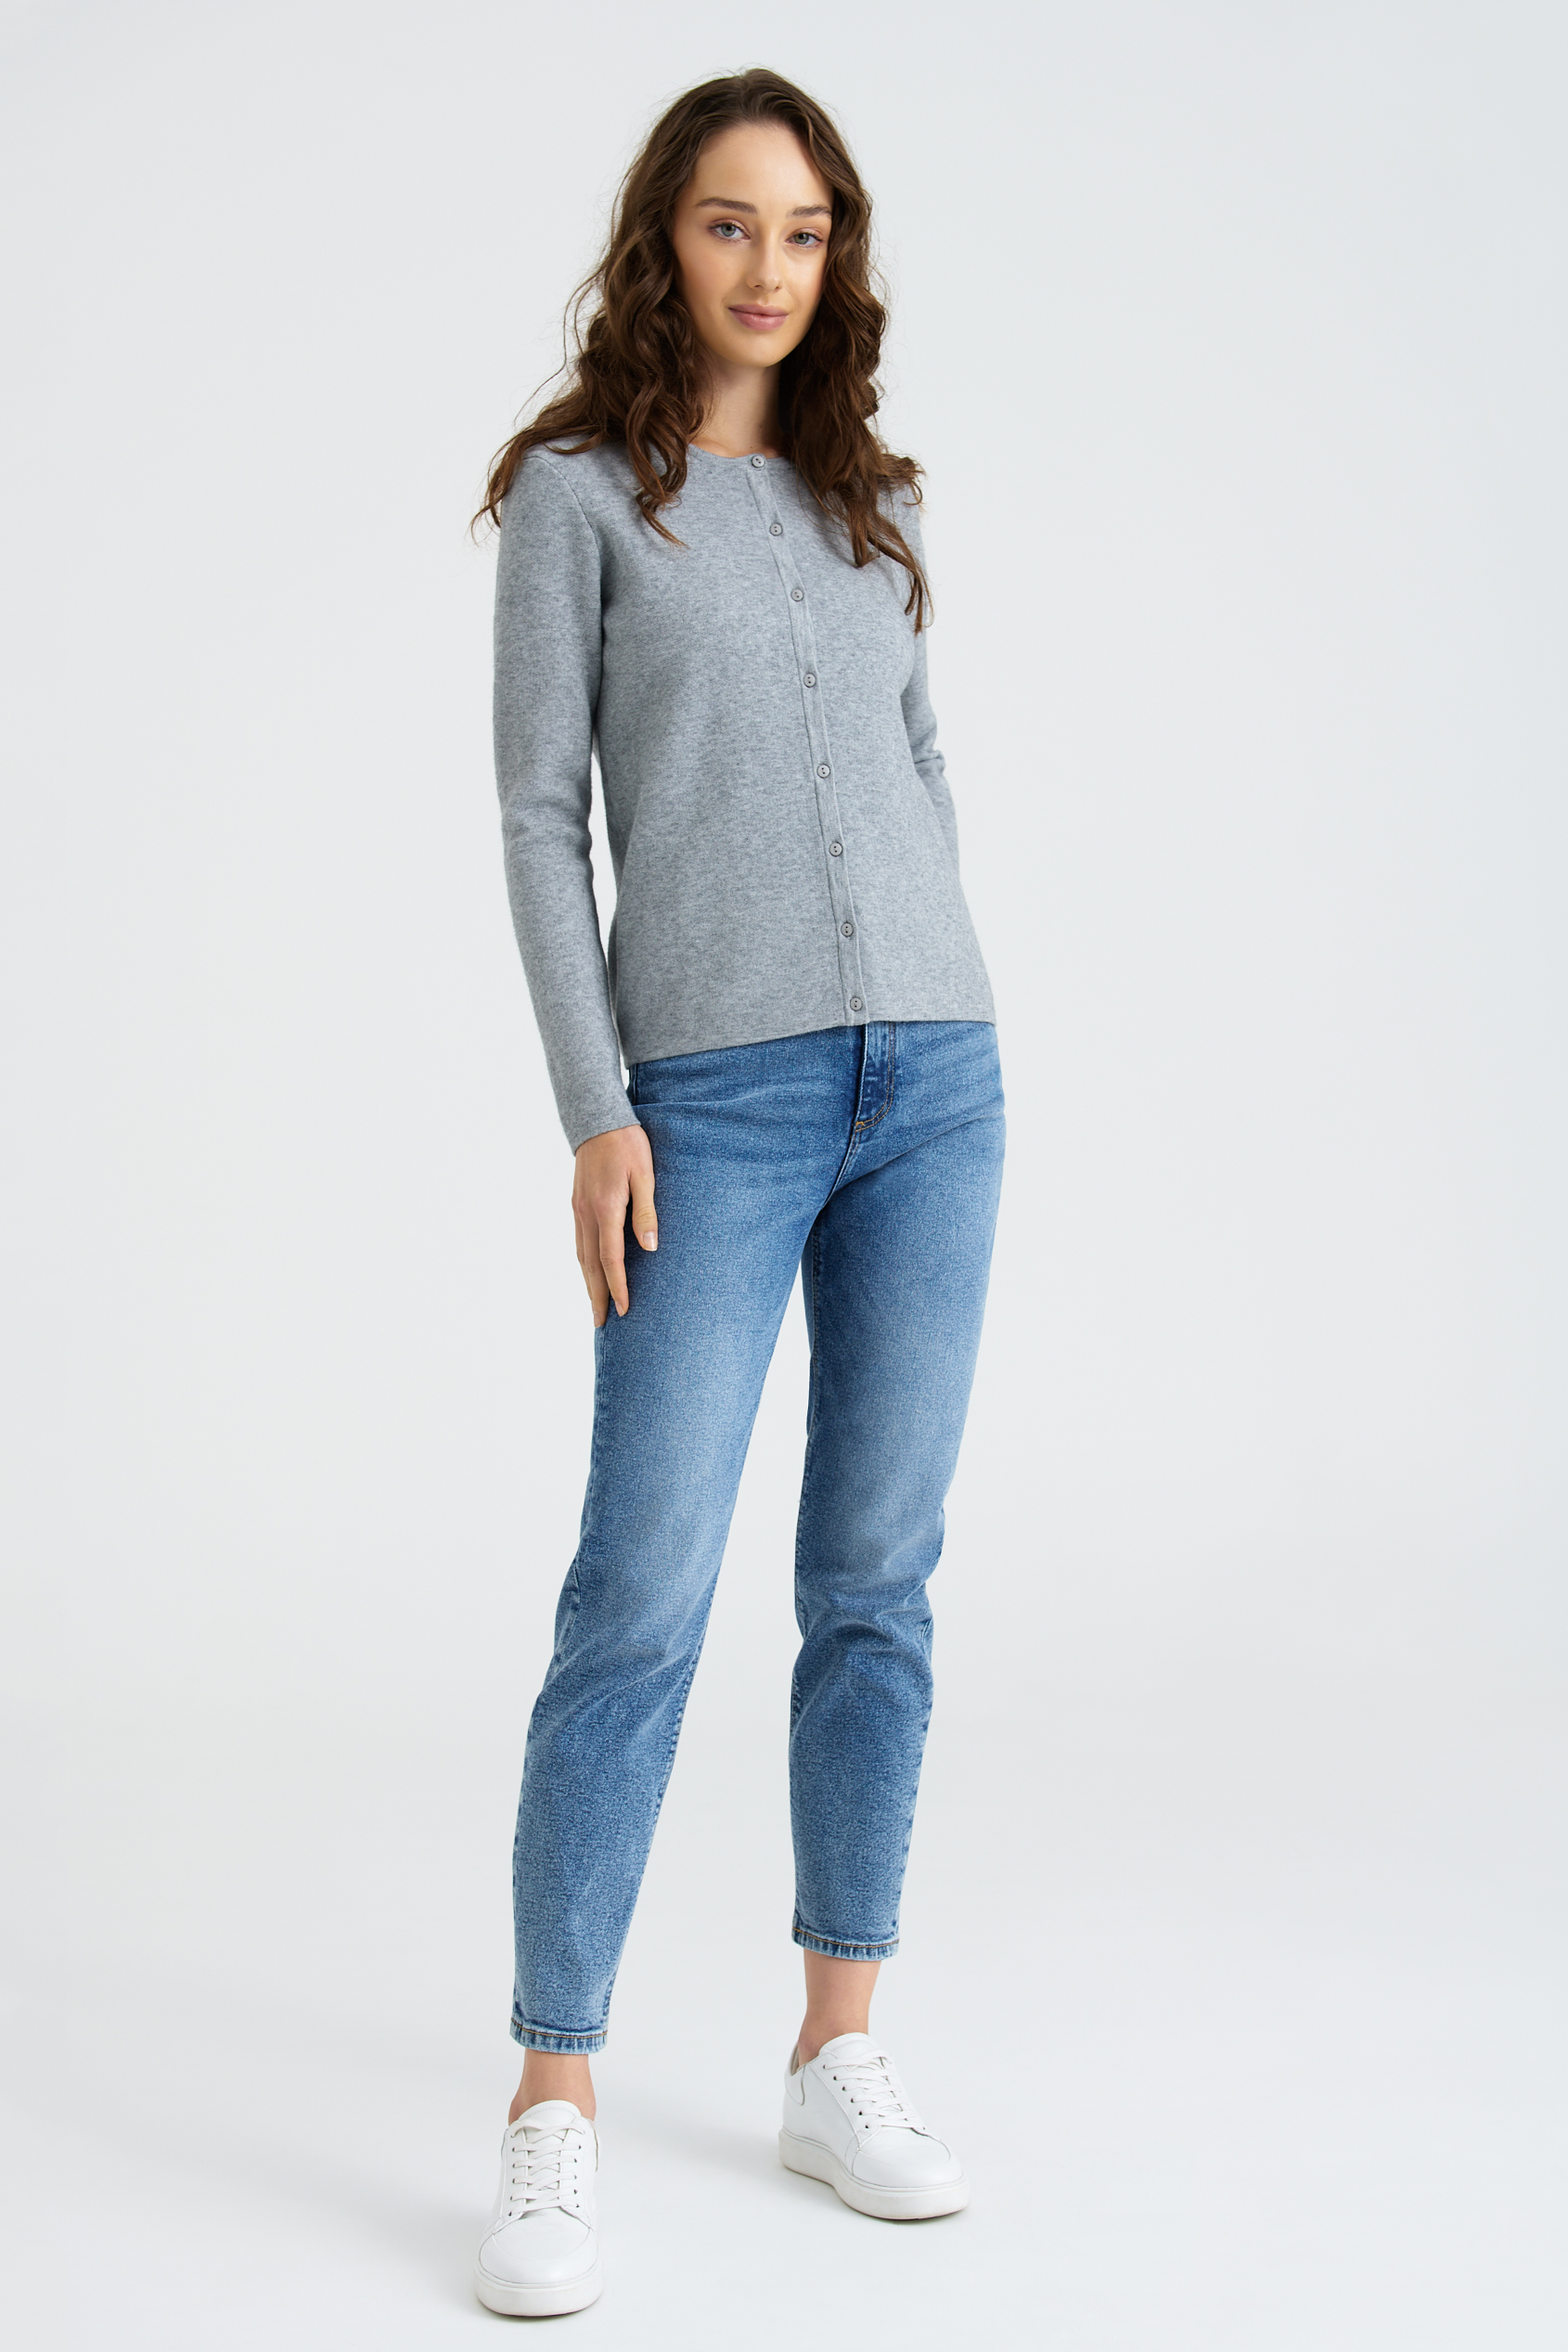 Greenpoint Woman's Sweater SWE617W2290M00